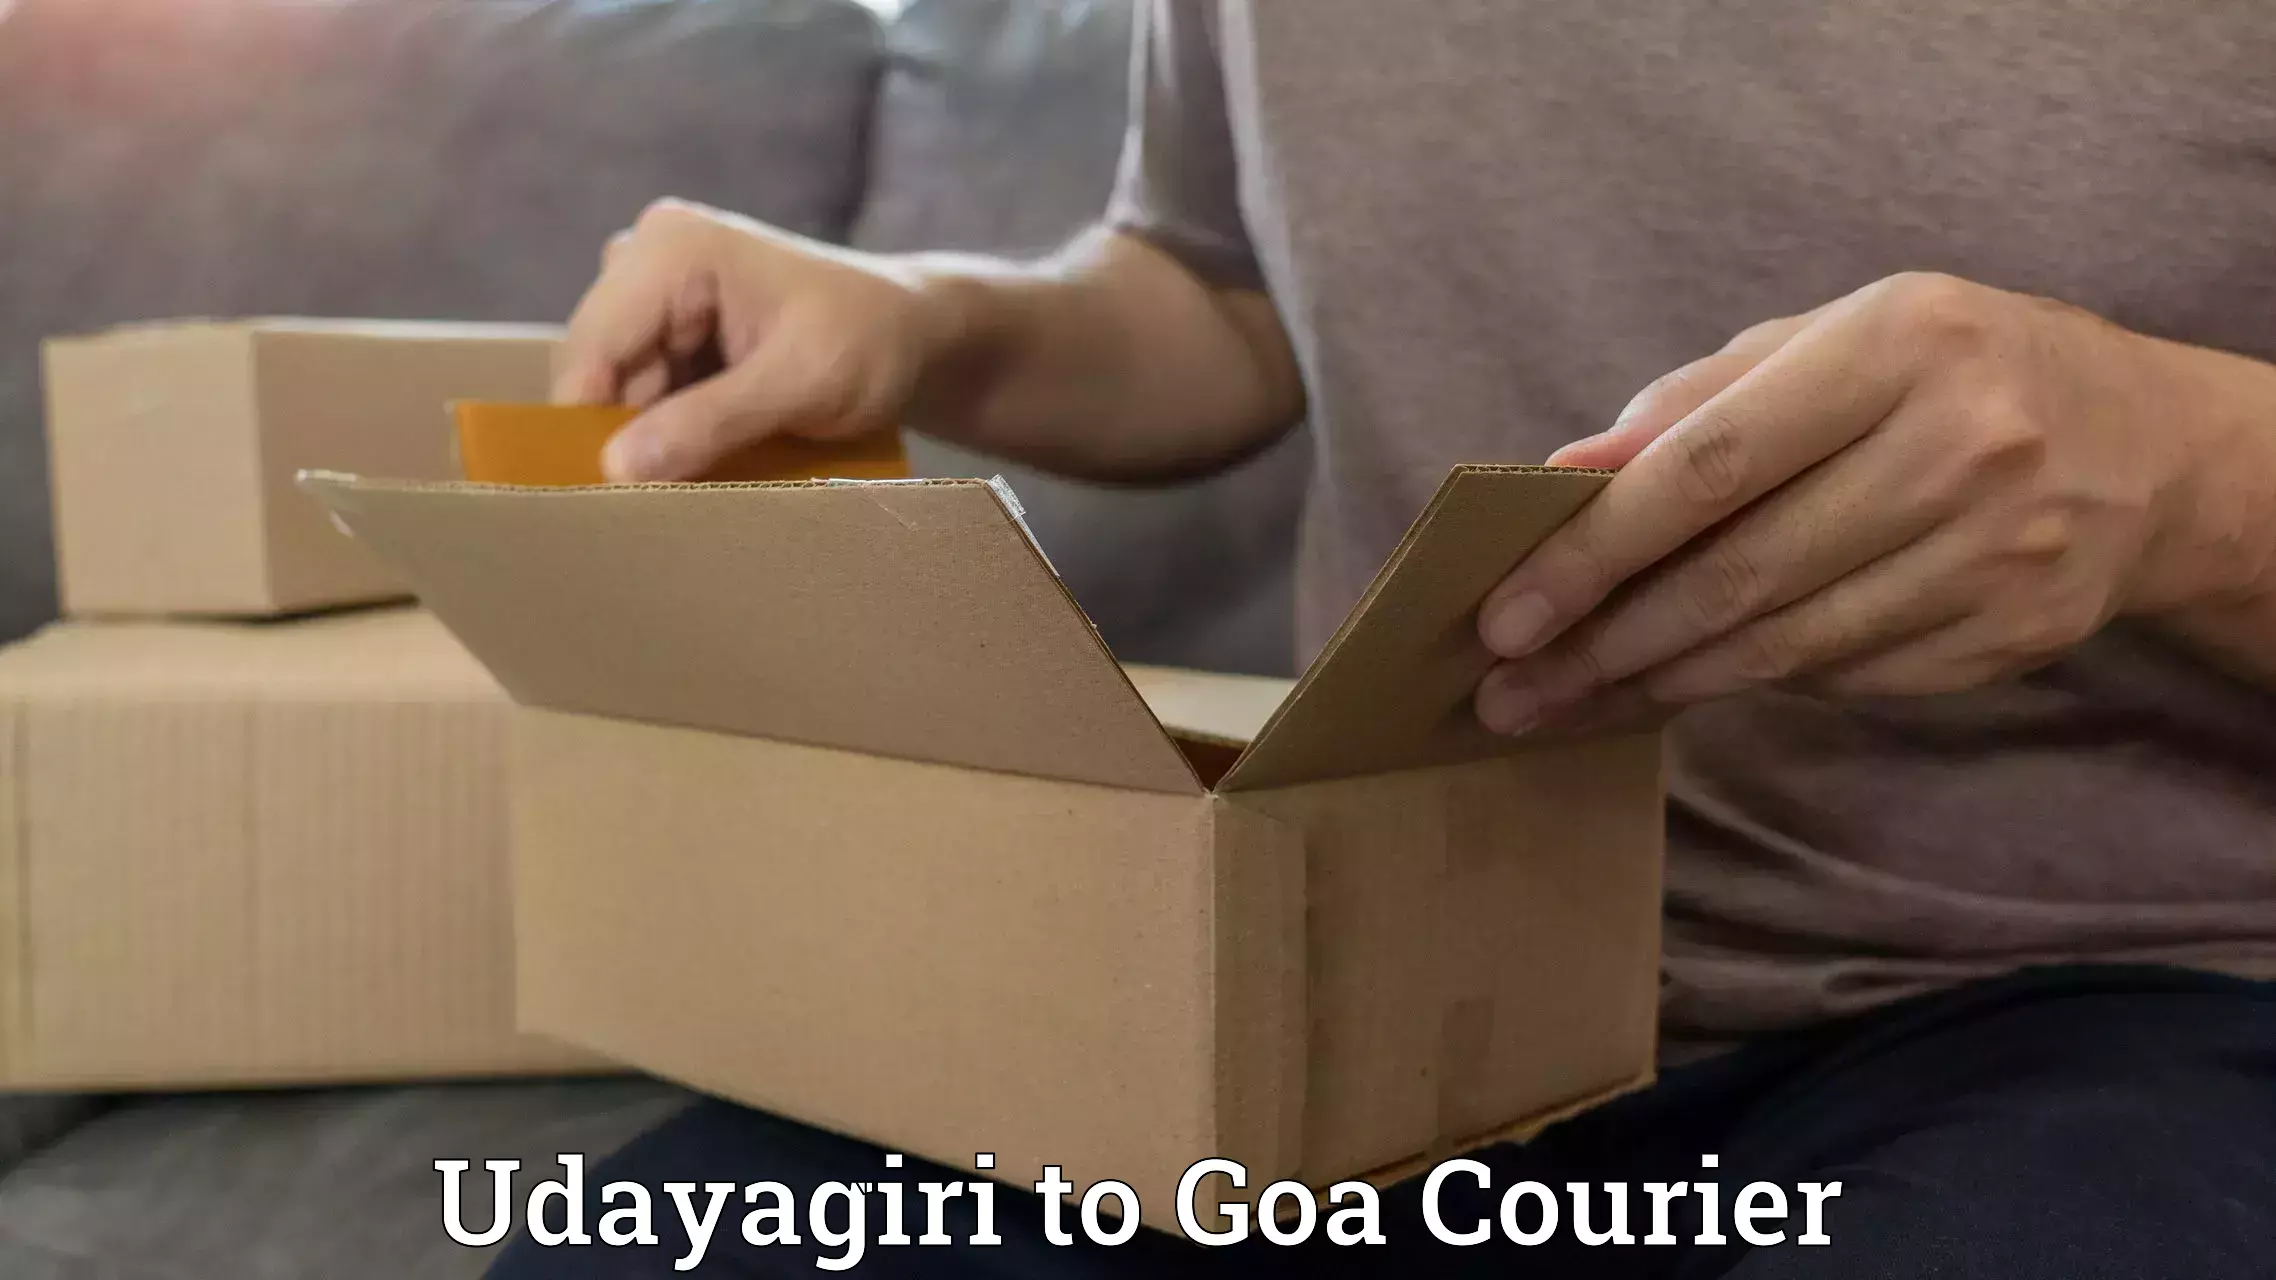 Reliable courier service Udayagiri to South Goa